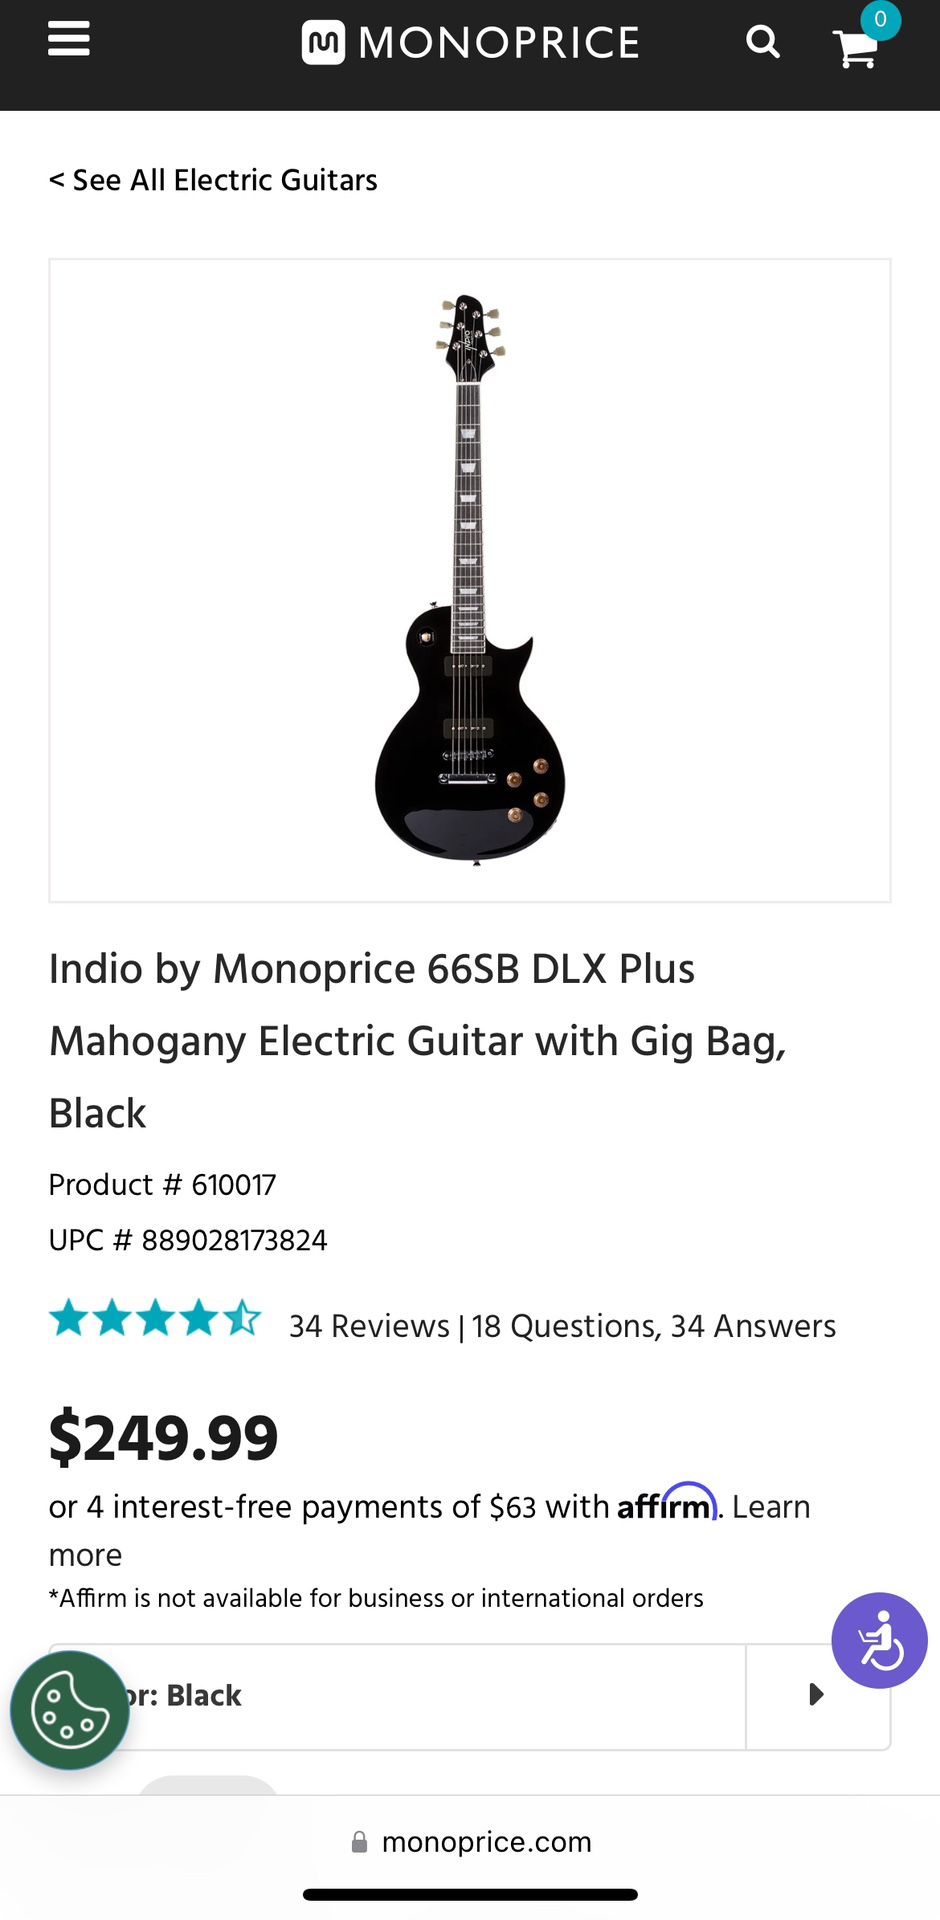 Indio by Monoprice 66SB DLX Plus Mahogany Electric Guitar plus gig bag NEW